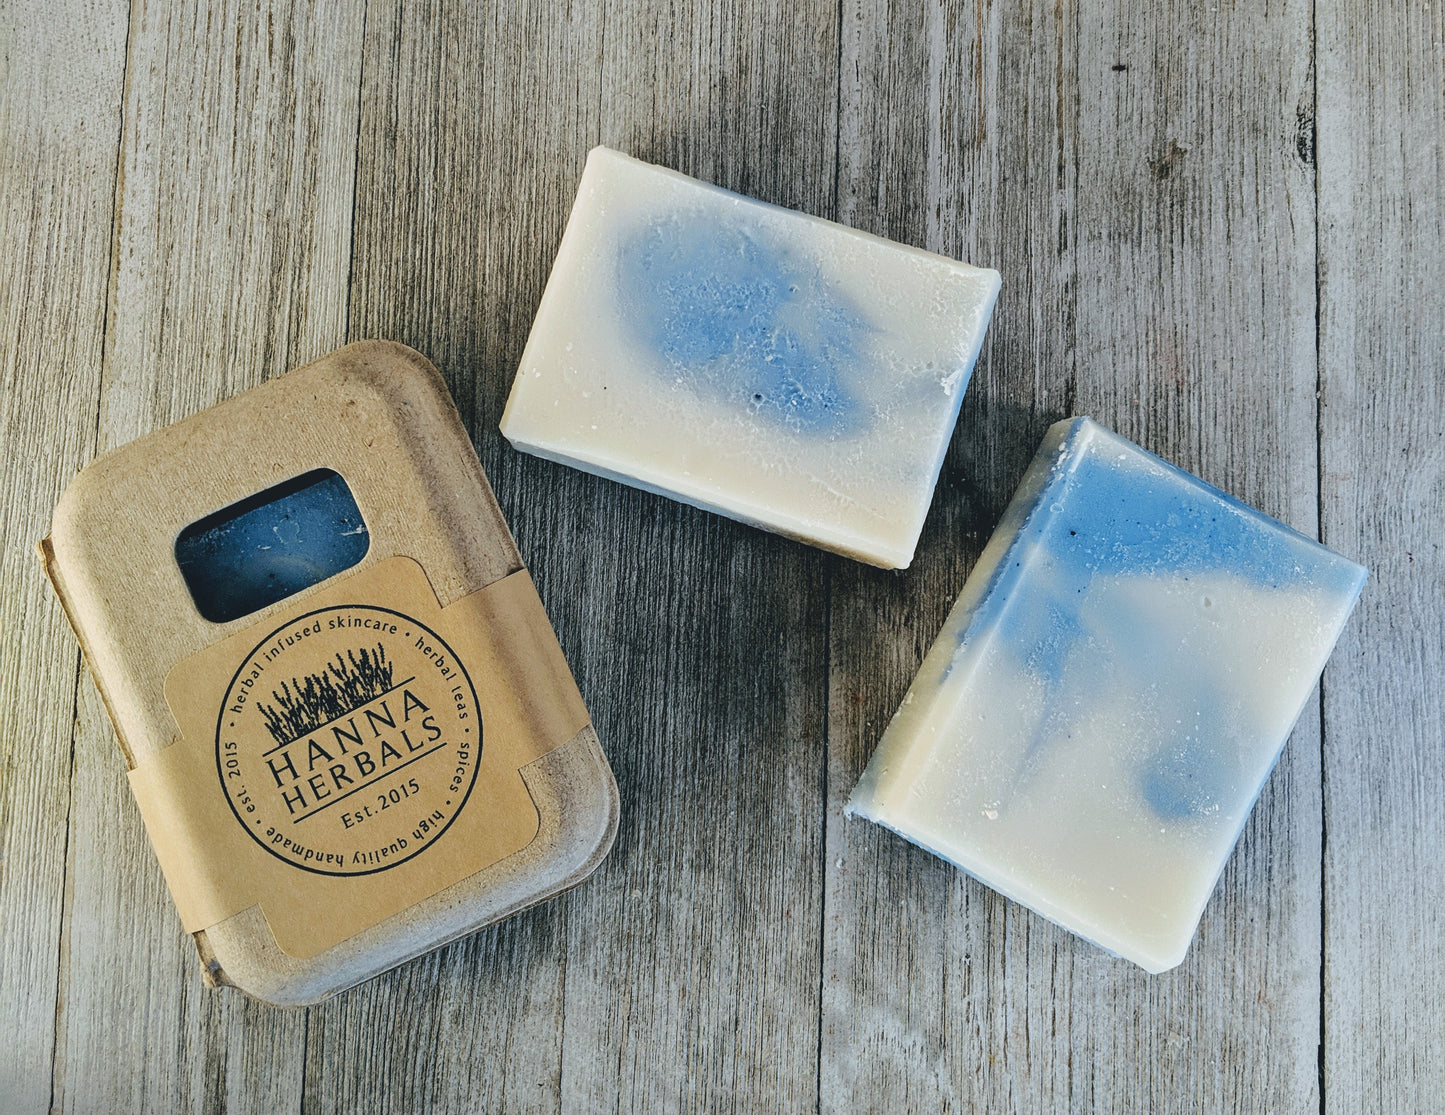 Blueberry Soap - 4 ounce bar - Hanna Herbals